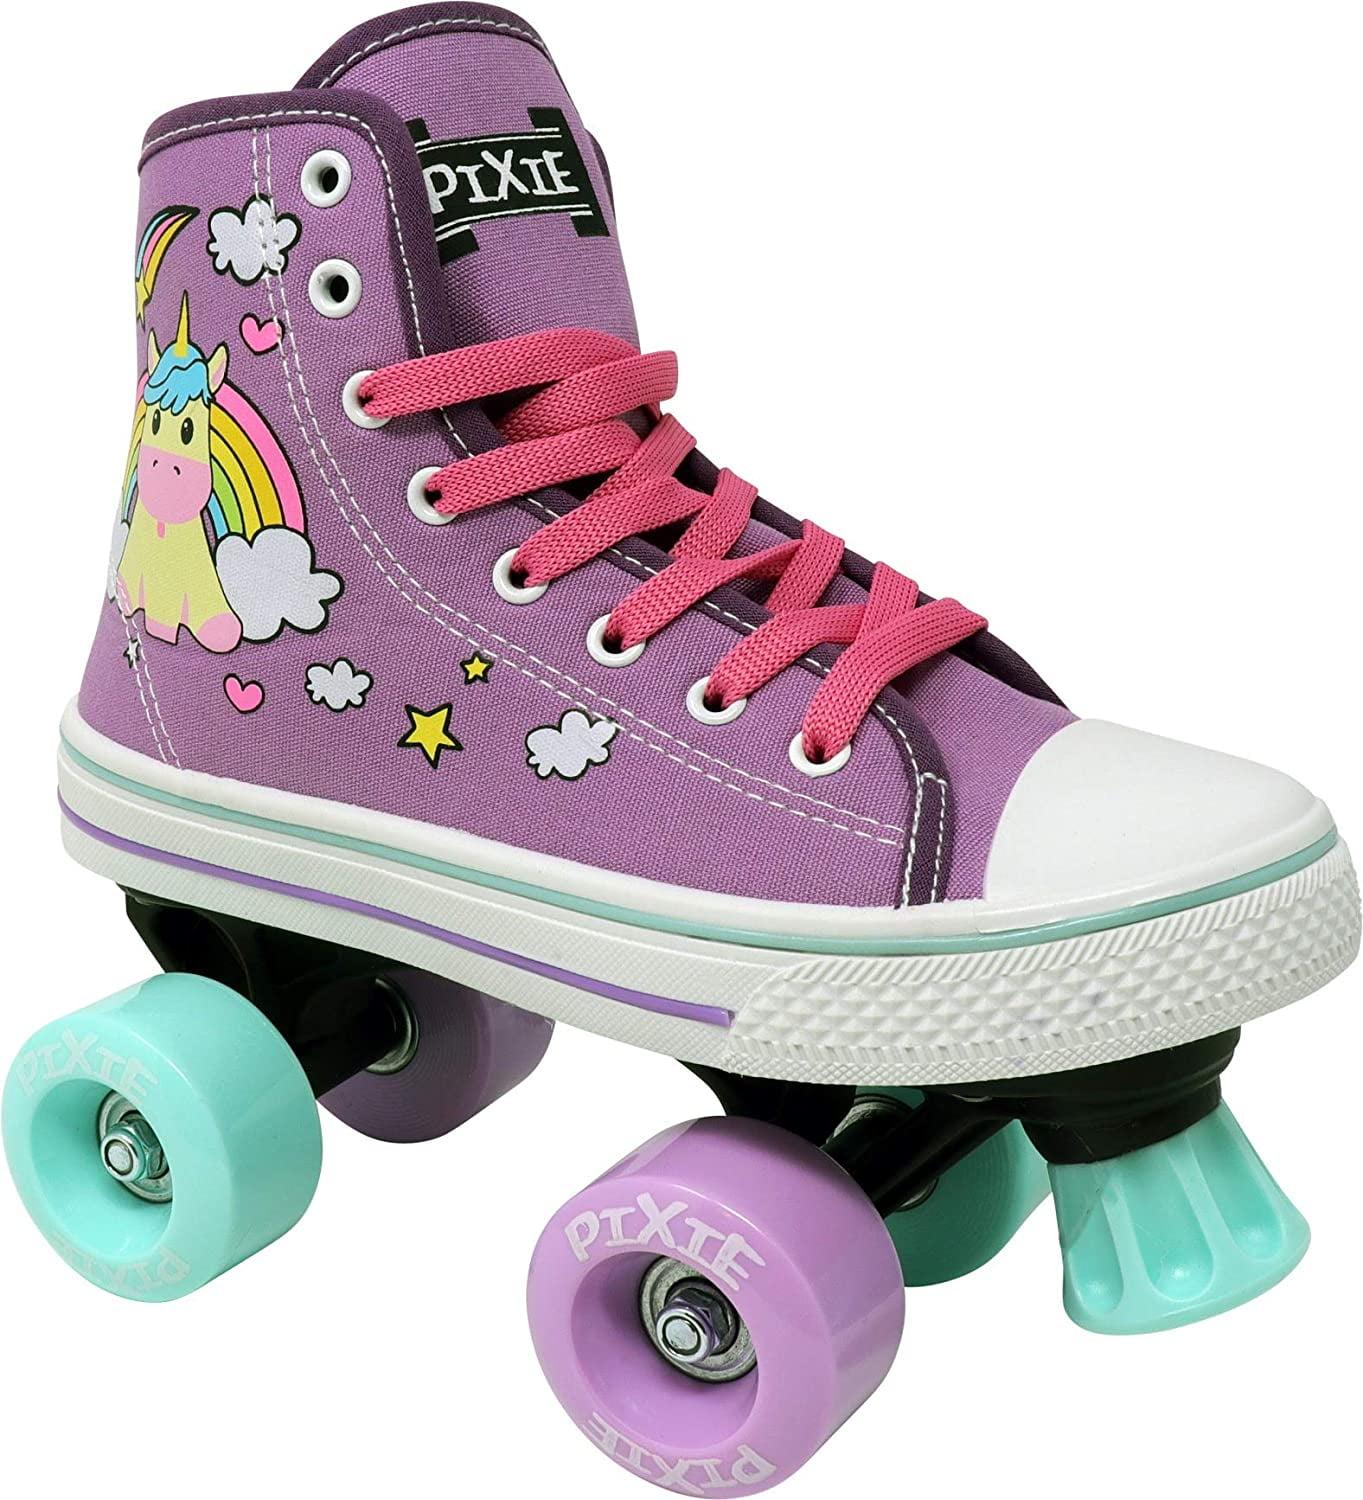 Fun & Cute Quality Build Comfortable Lenexa Roller Skates for Girls uGOgrl Kids Quad Roller Skates for Indoor/Outdoor Skating 